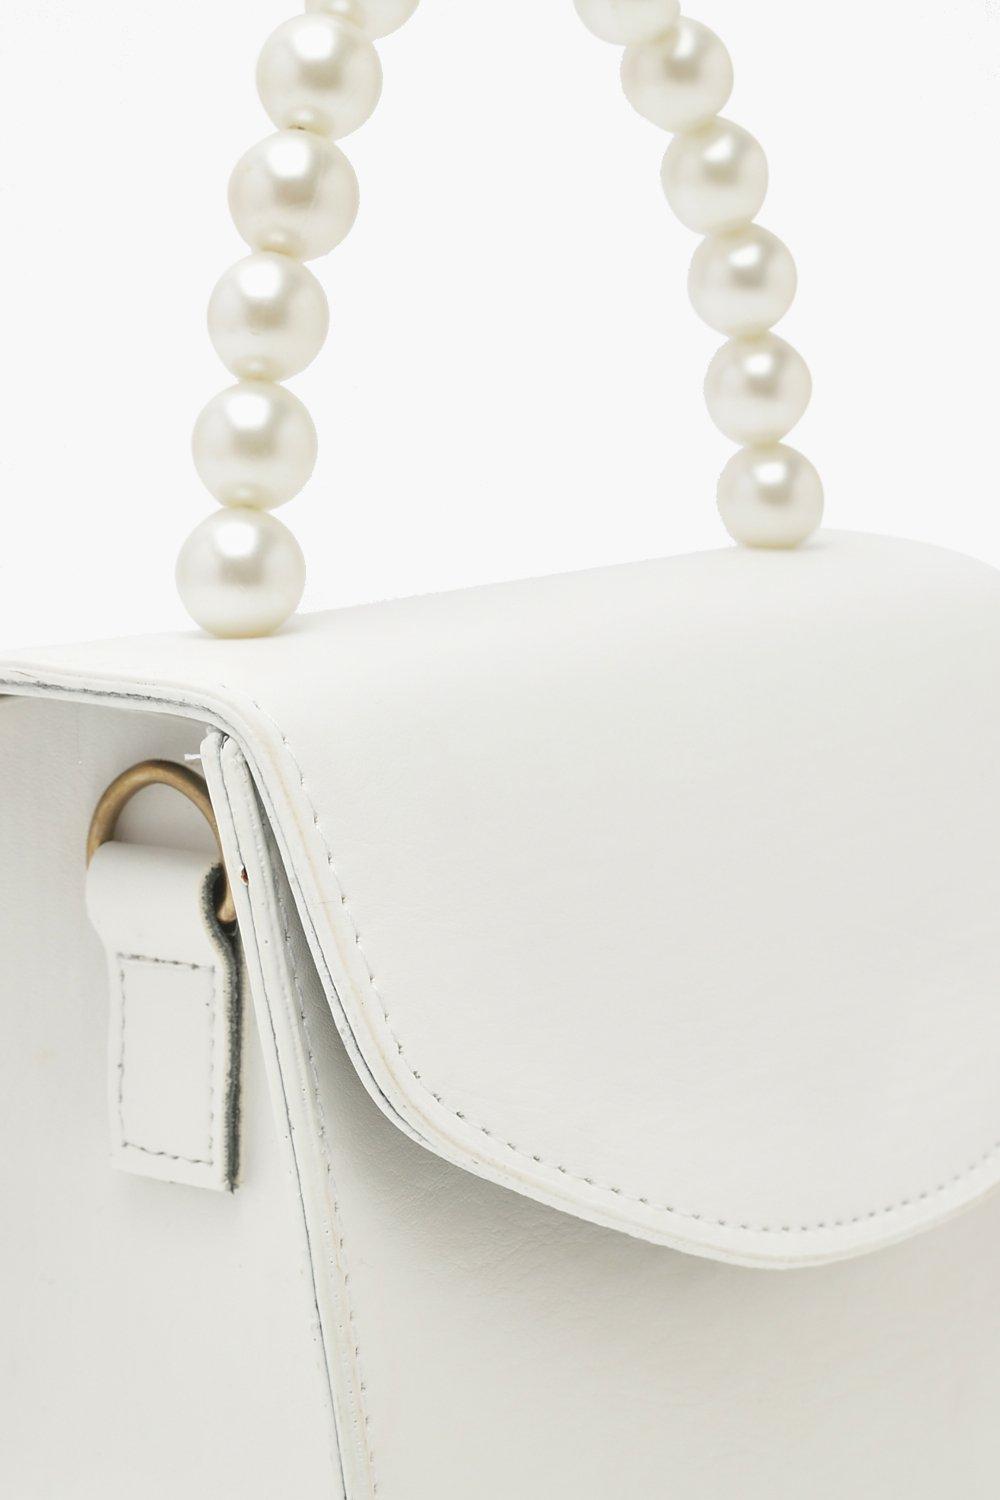 White Pearl Handbag | vlr.eng.br